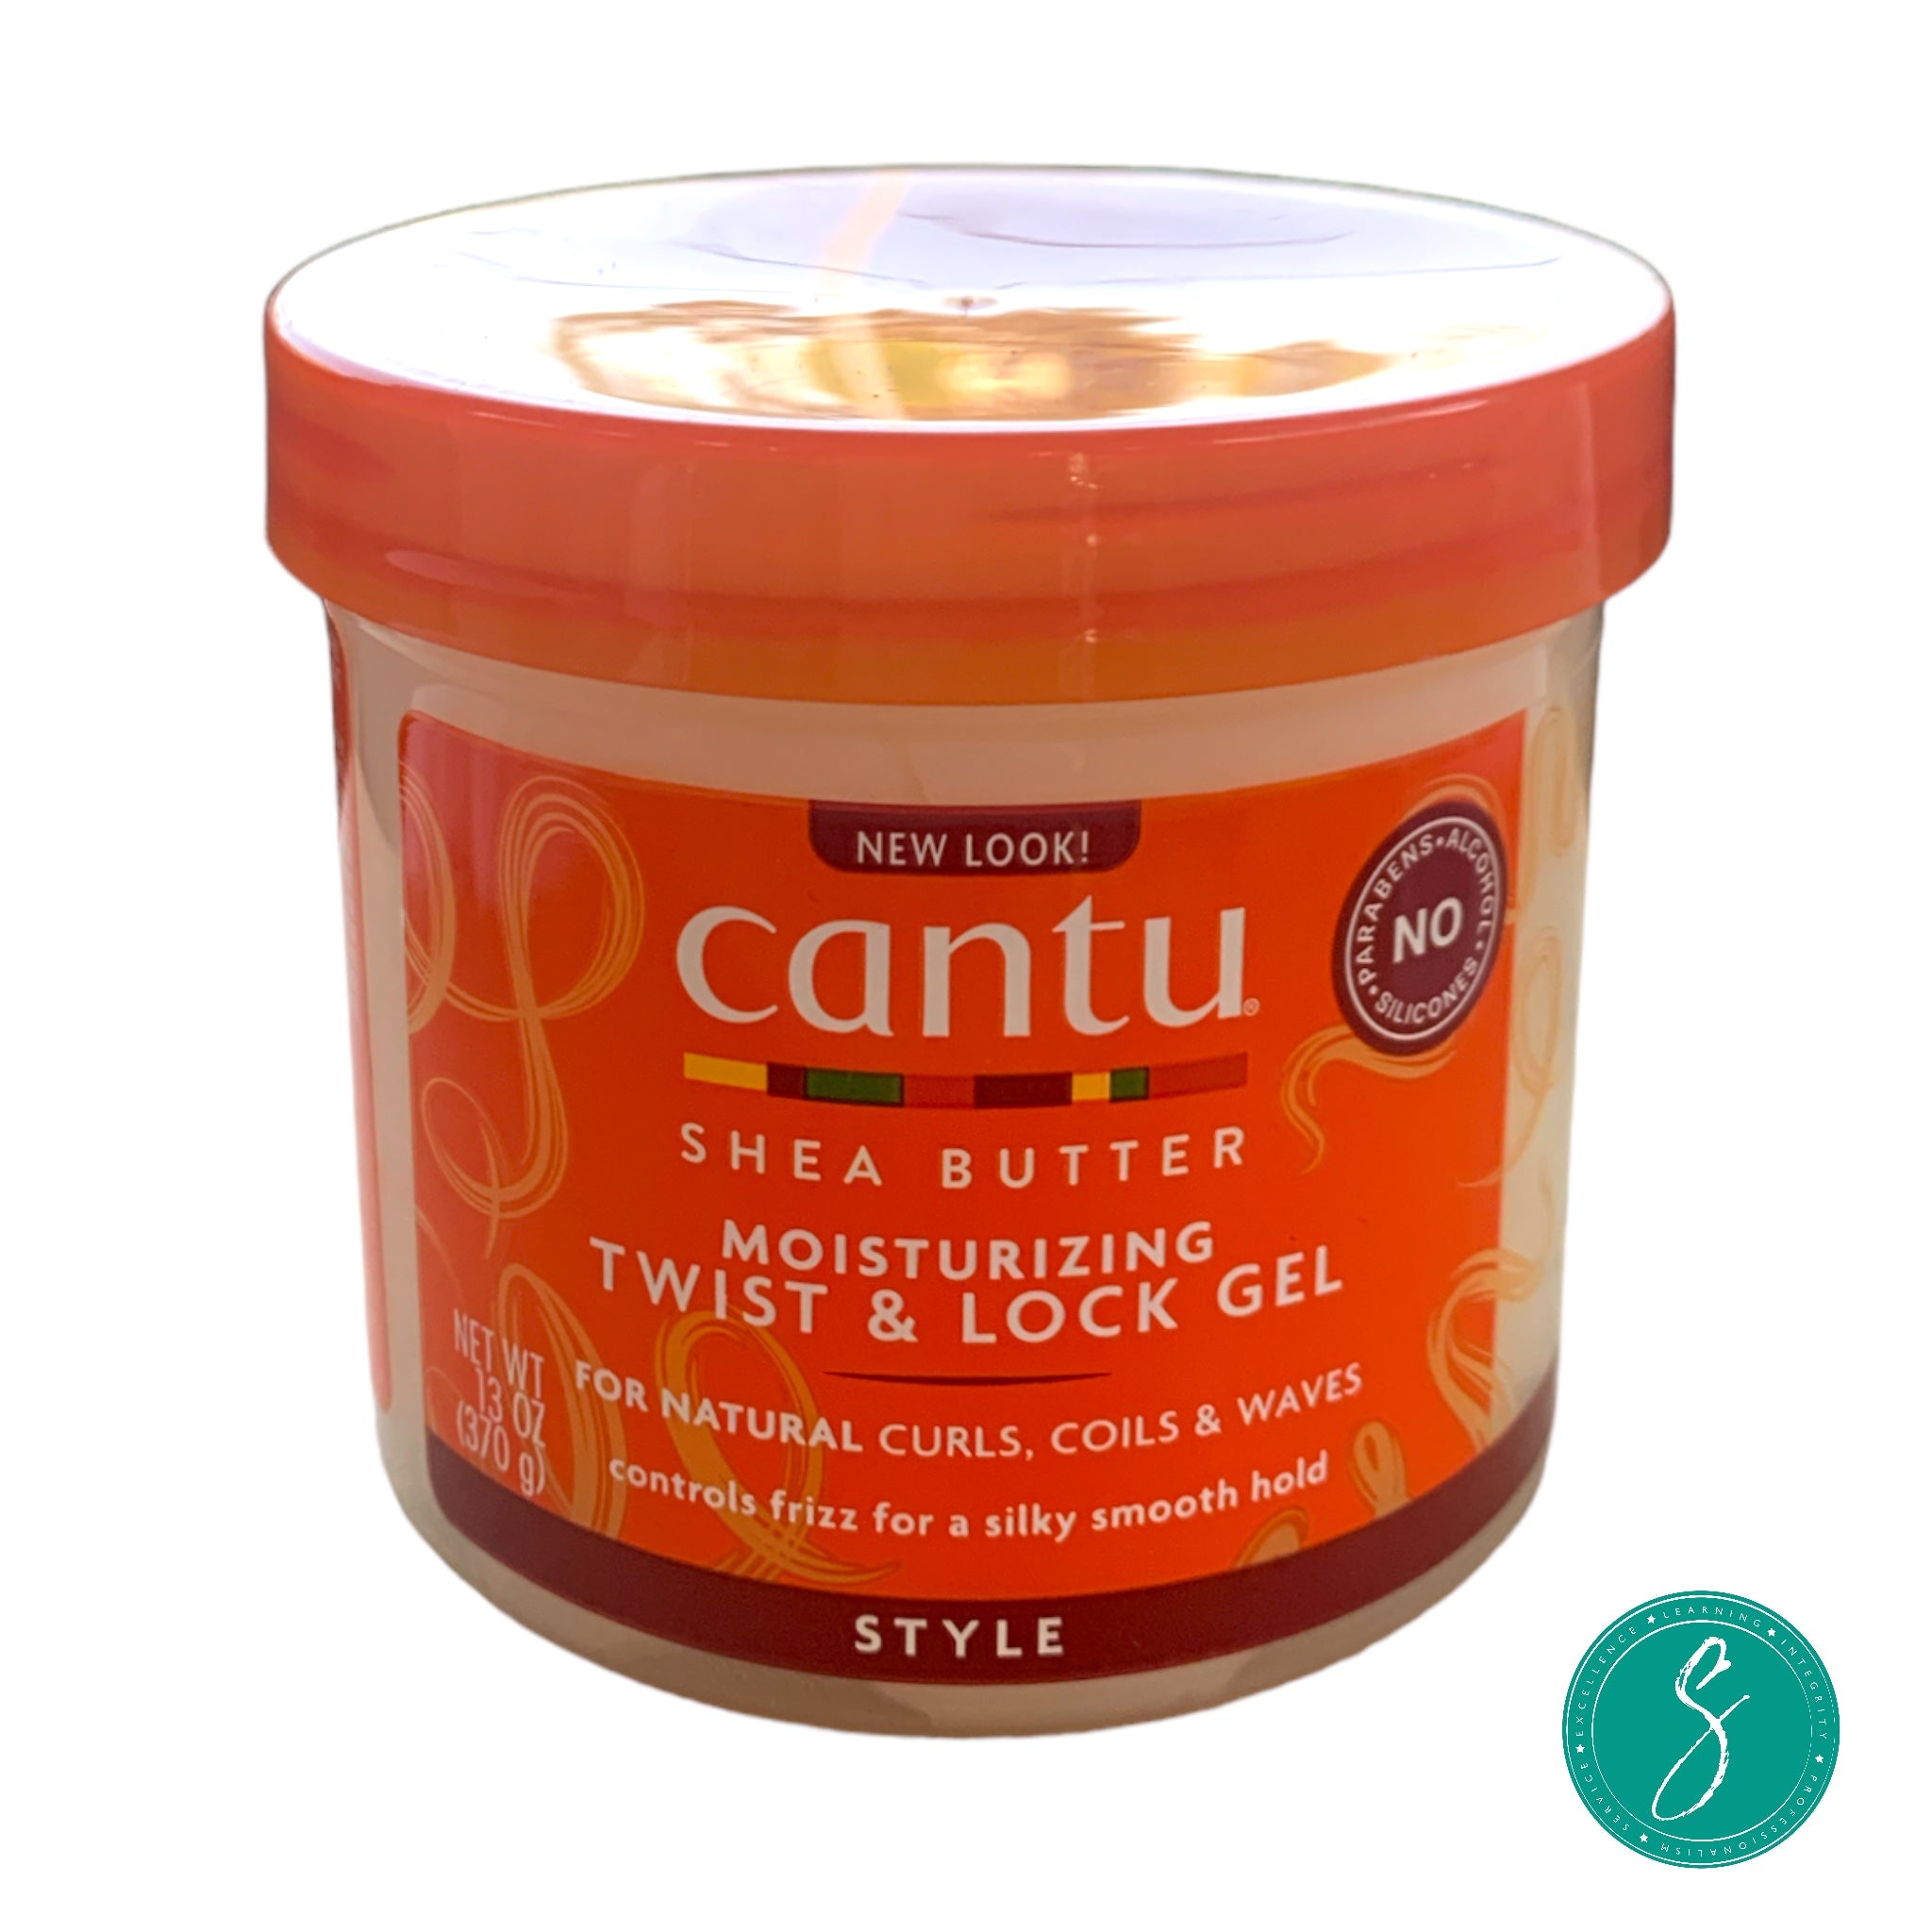 Cantu Shea Butter Moisturizing Twist & Lock Gel, for Natural Hair - 13 oz jar